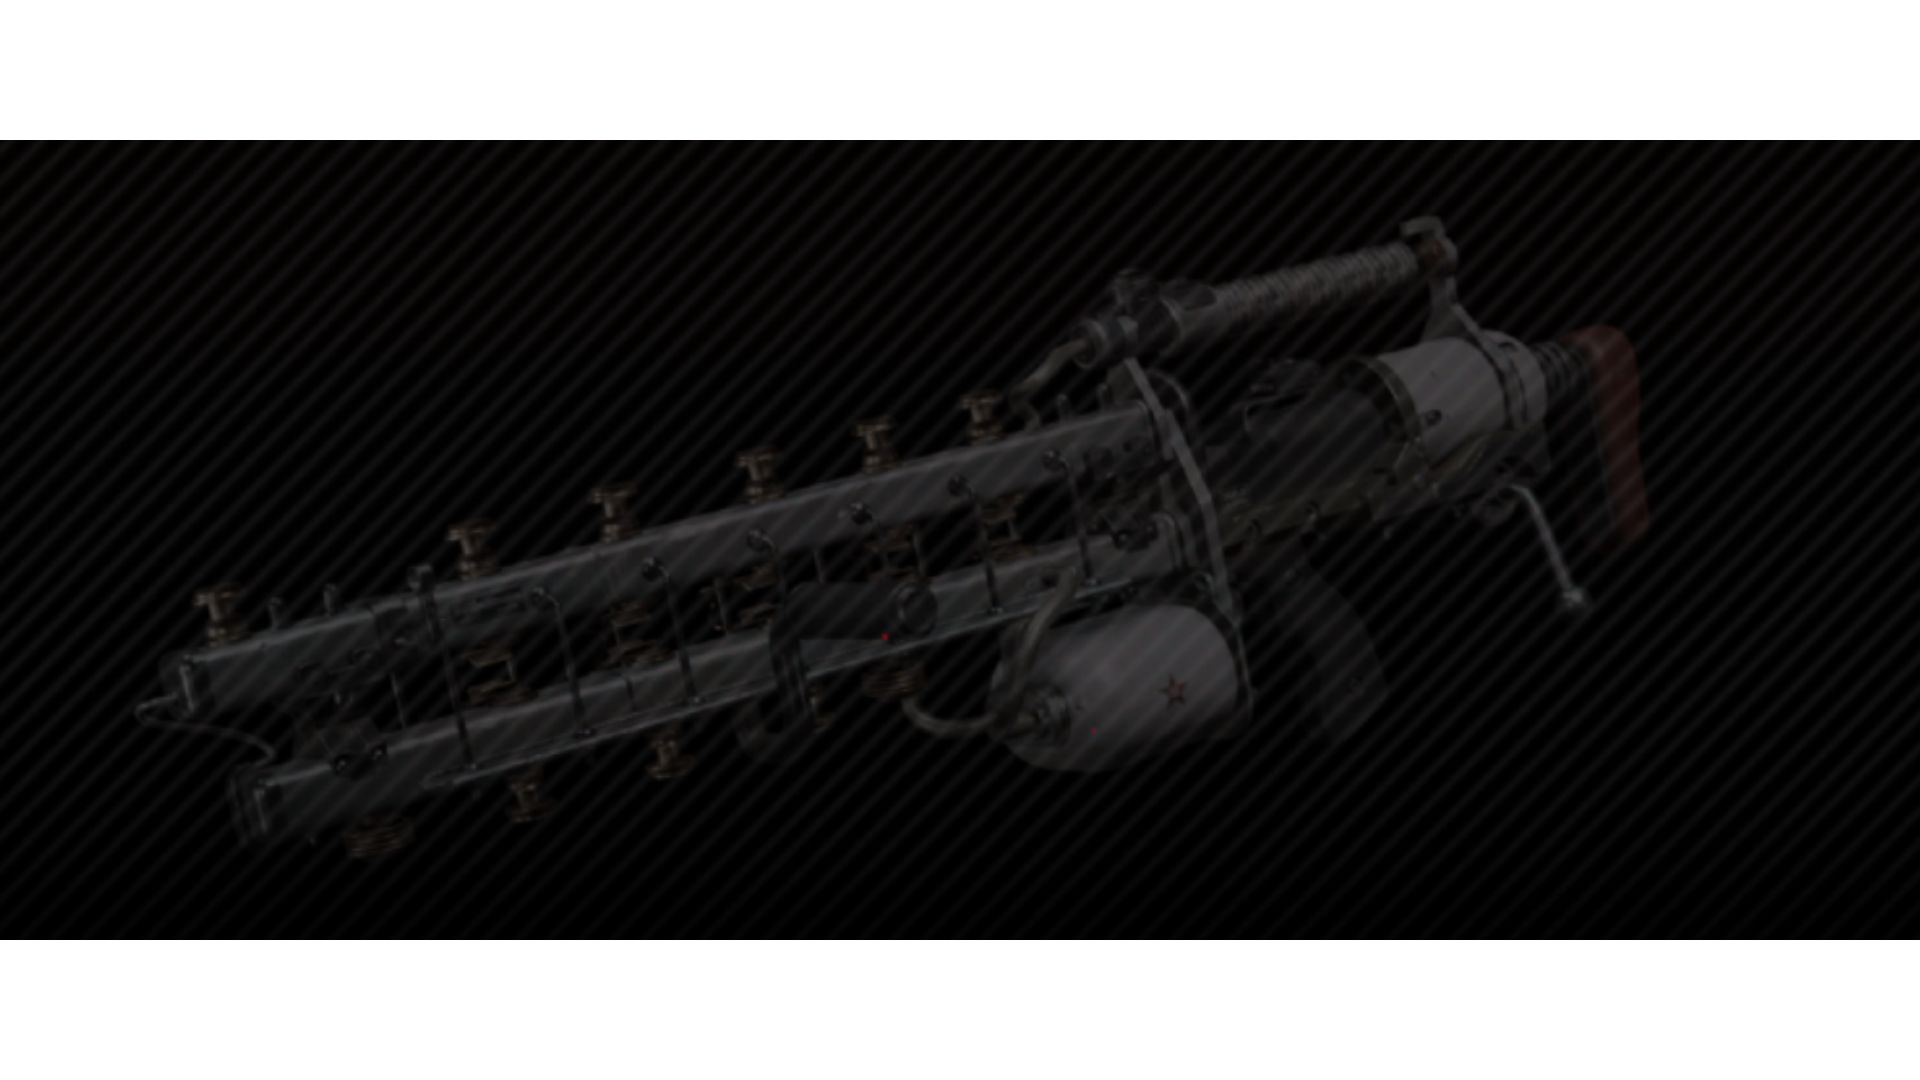 Atomic Heart weapons: The Railgun can be seen